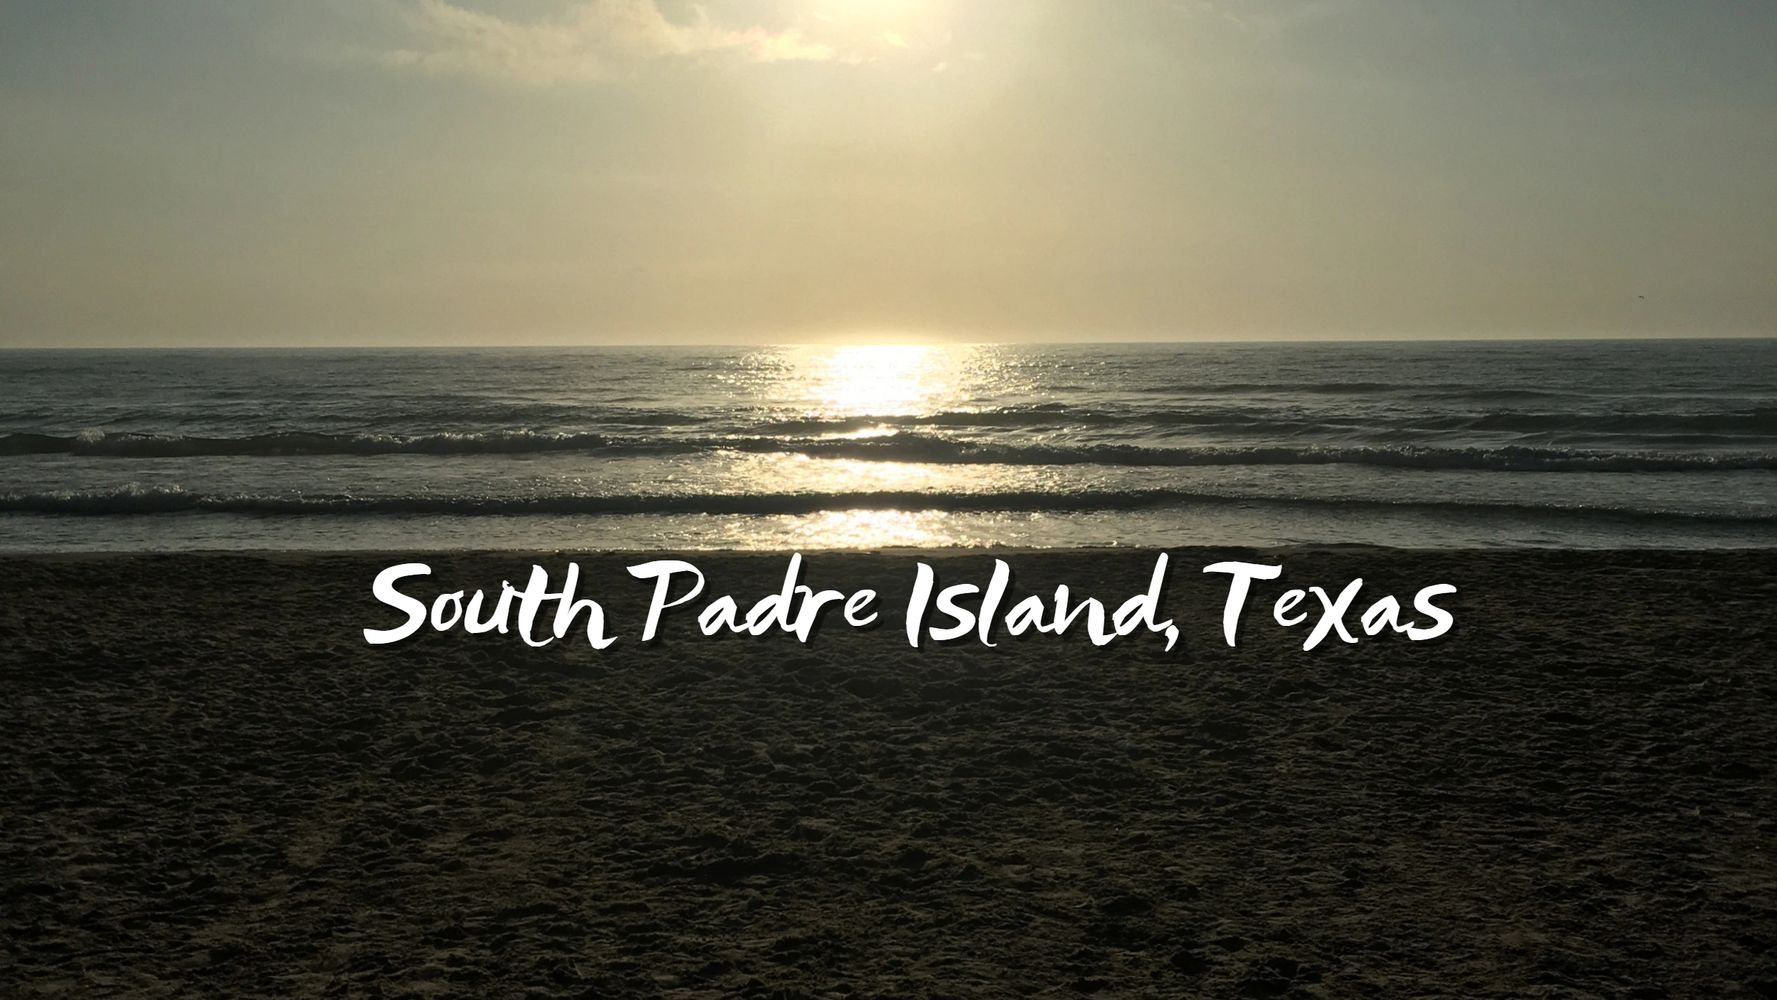 Texas beach vacay south padre island beach sunrise South Padre Island, Texas 